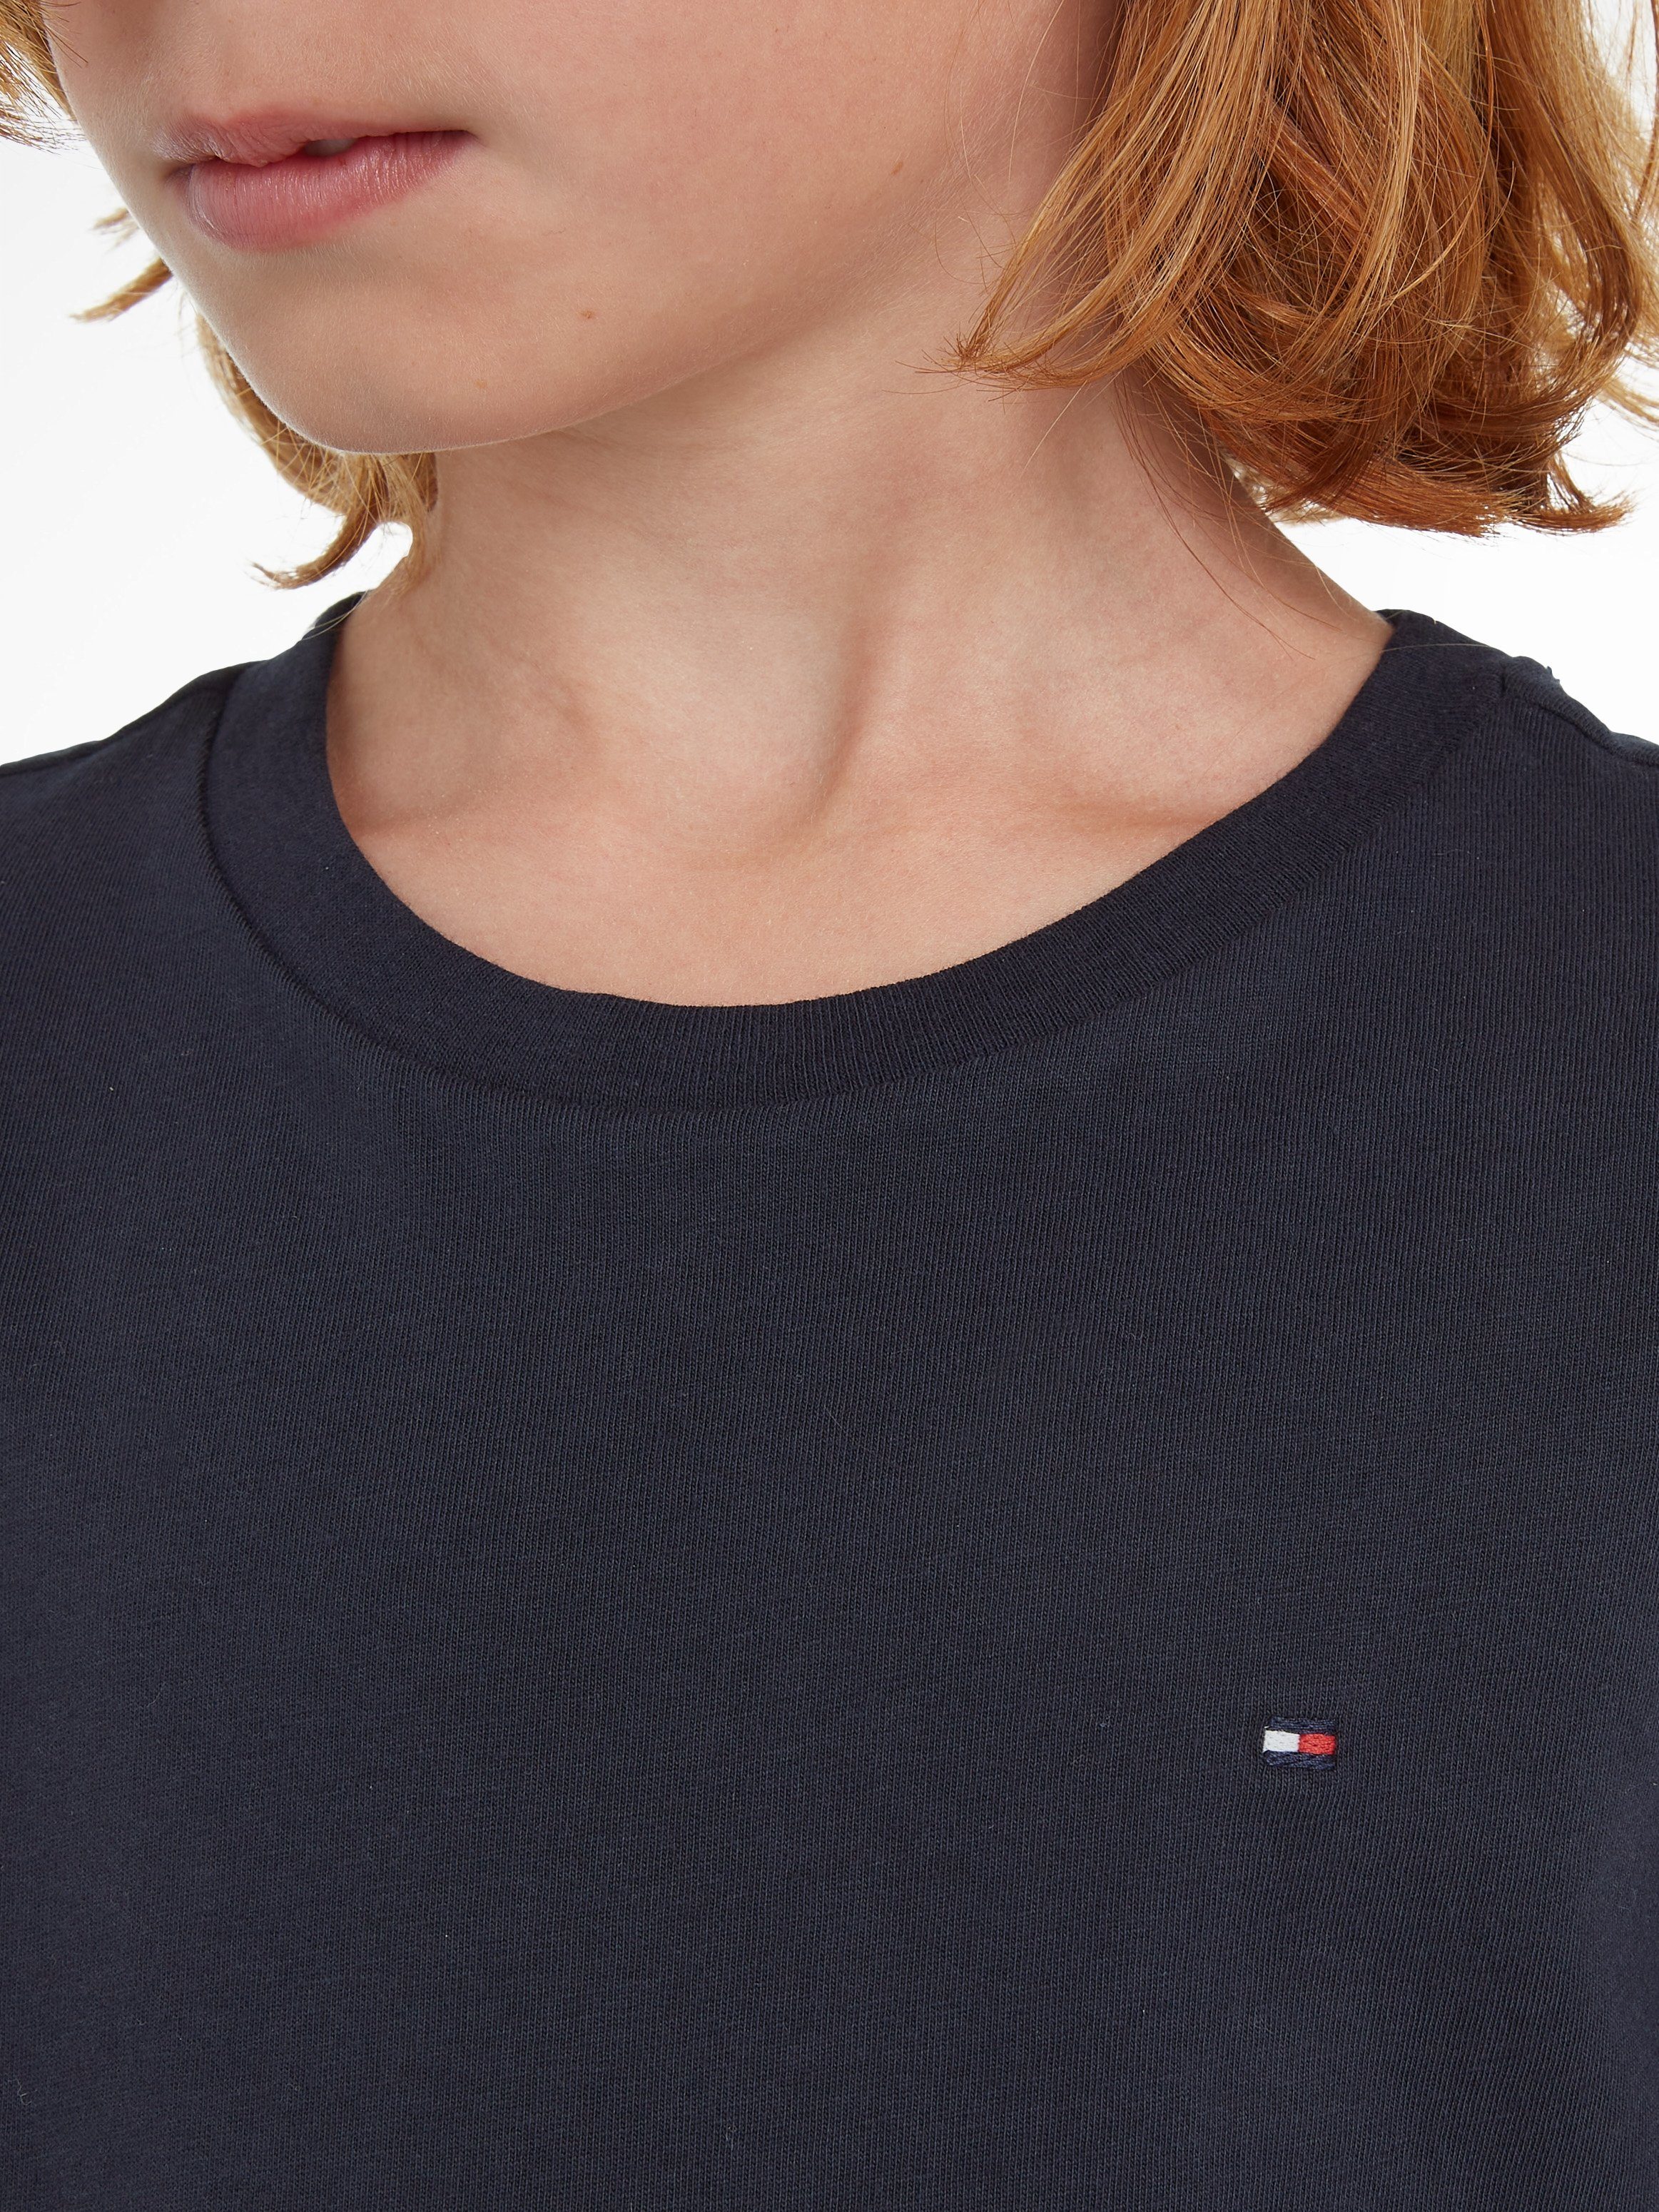 Tommy Hilfiger BASIC T-Shirt CN KNIT Kids Jungen MiniMe,für Kinder Junior BOYS